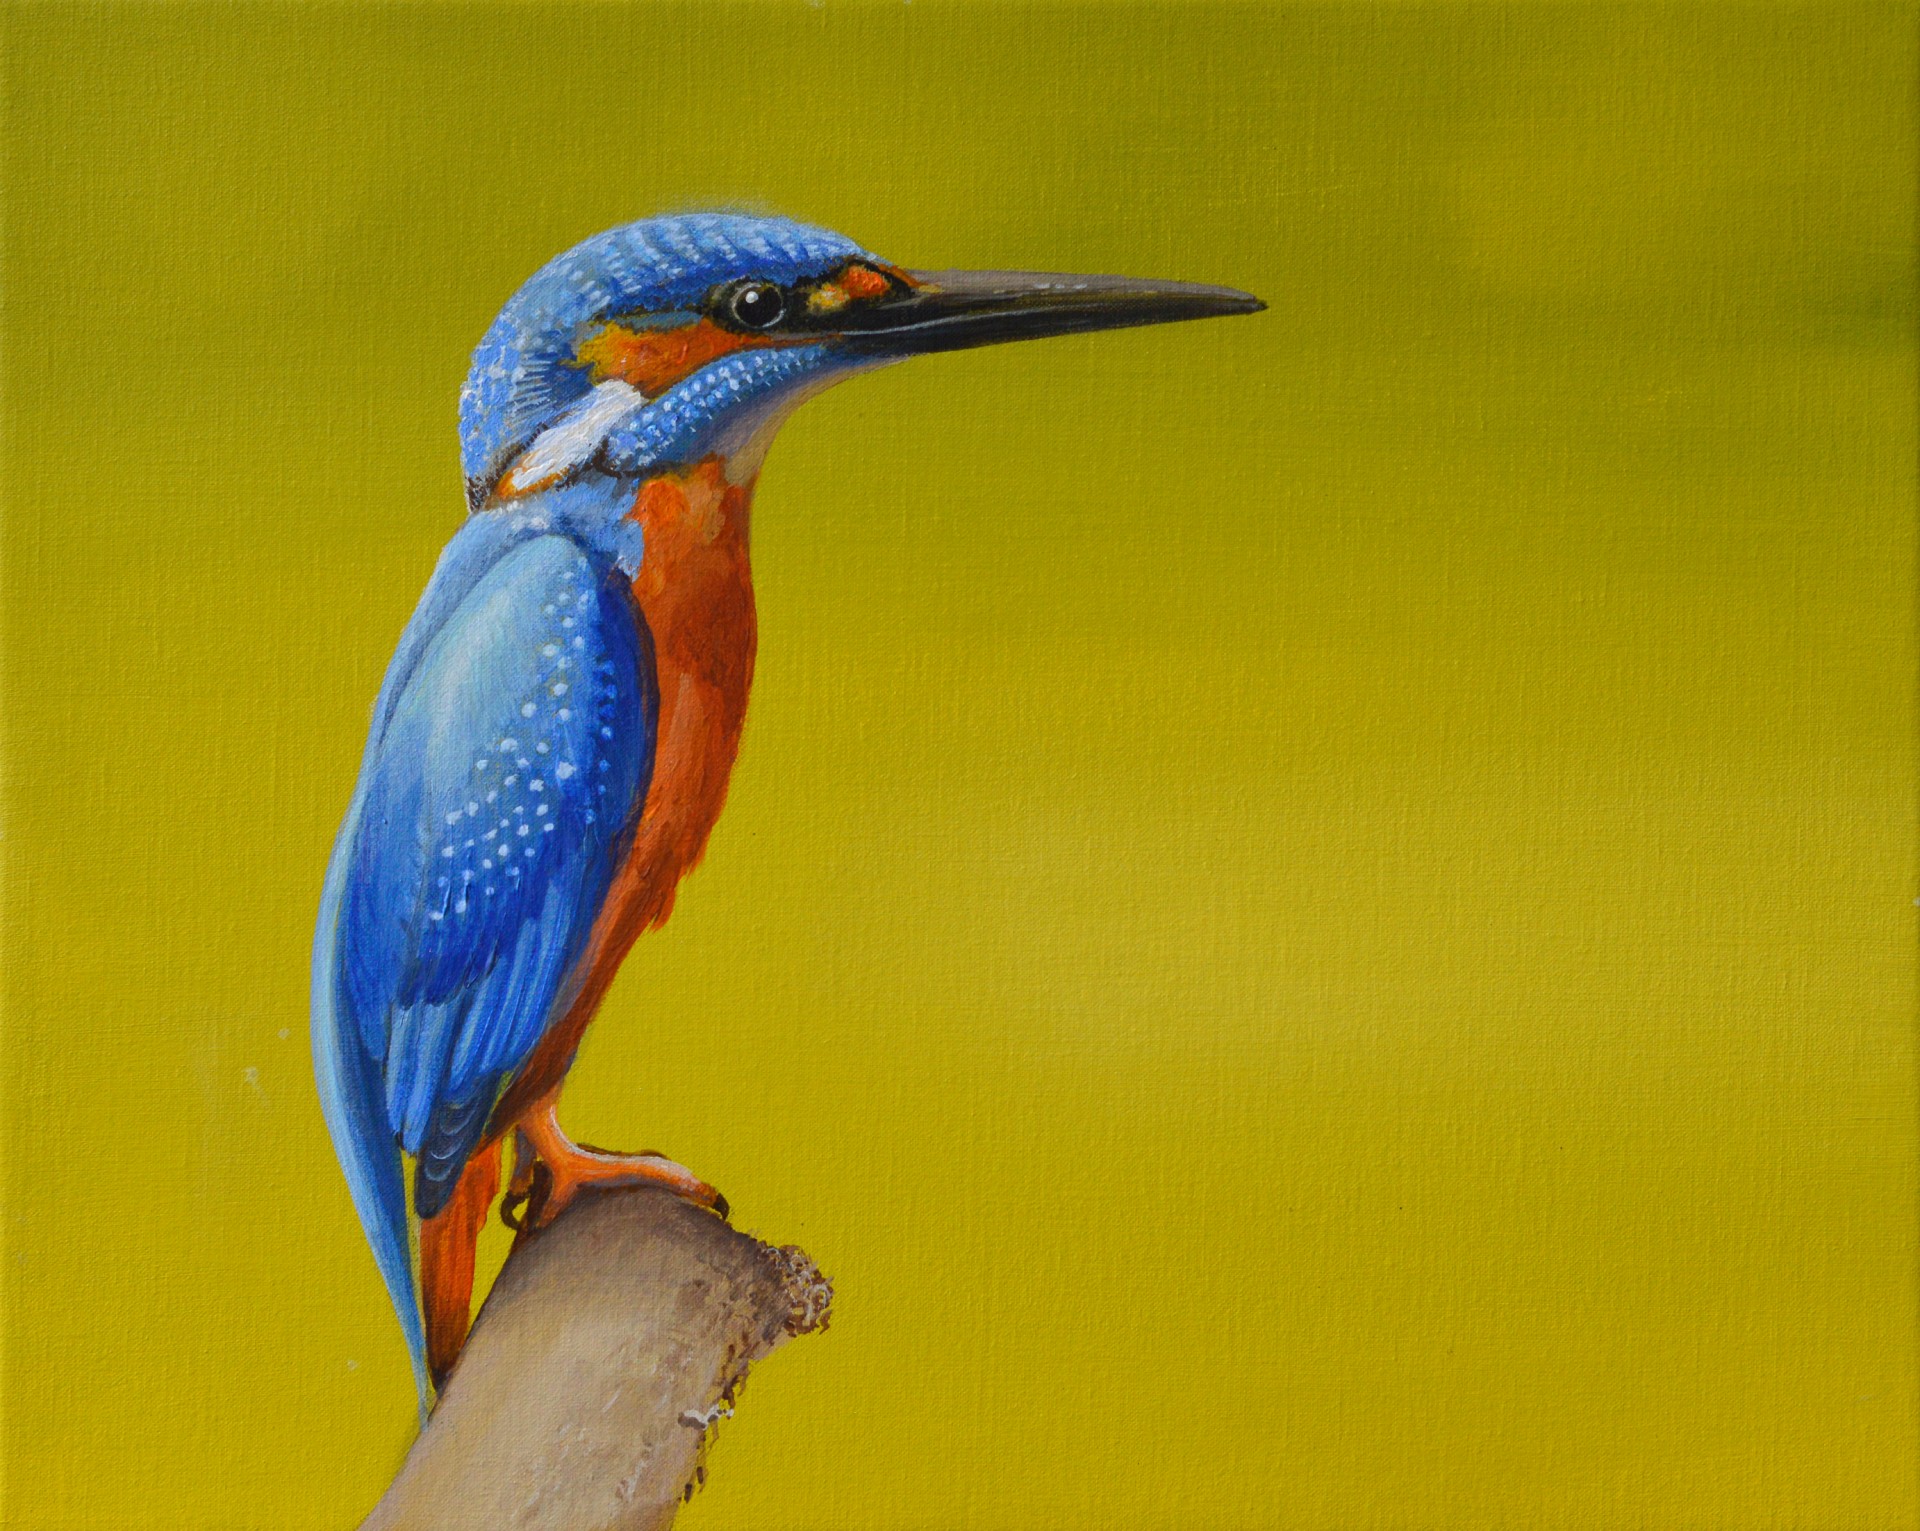 Frank Anderson | Kingfisher aol, 40 x 50cm